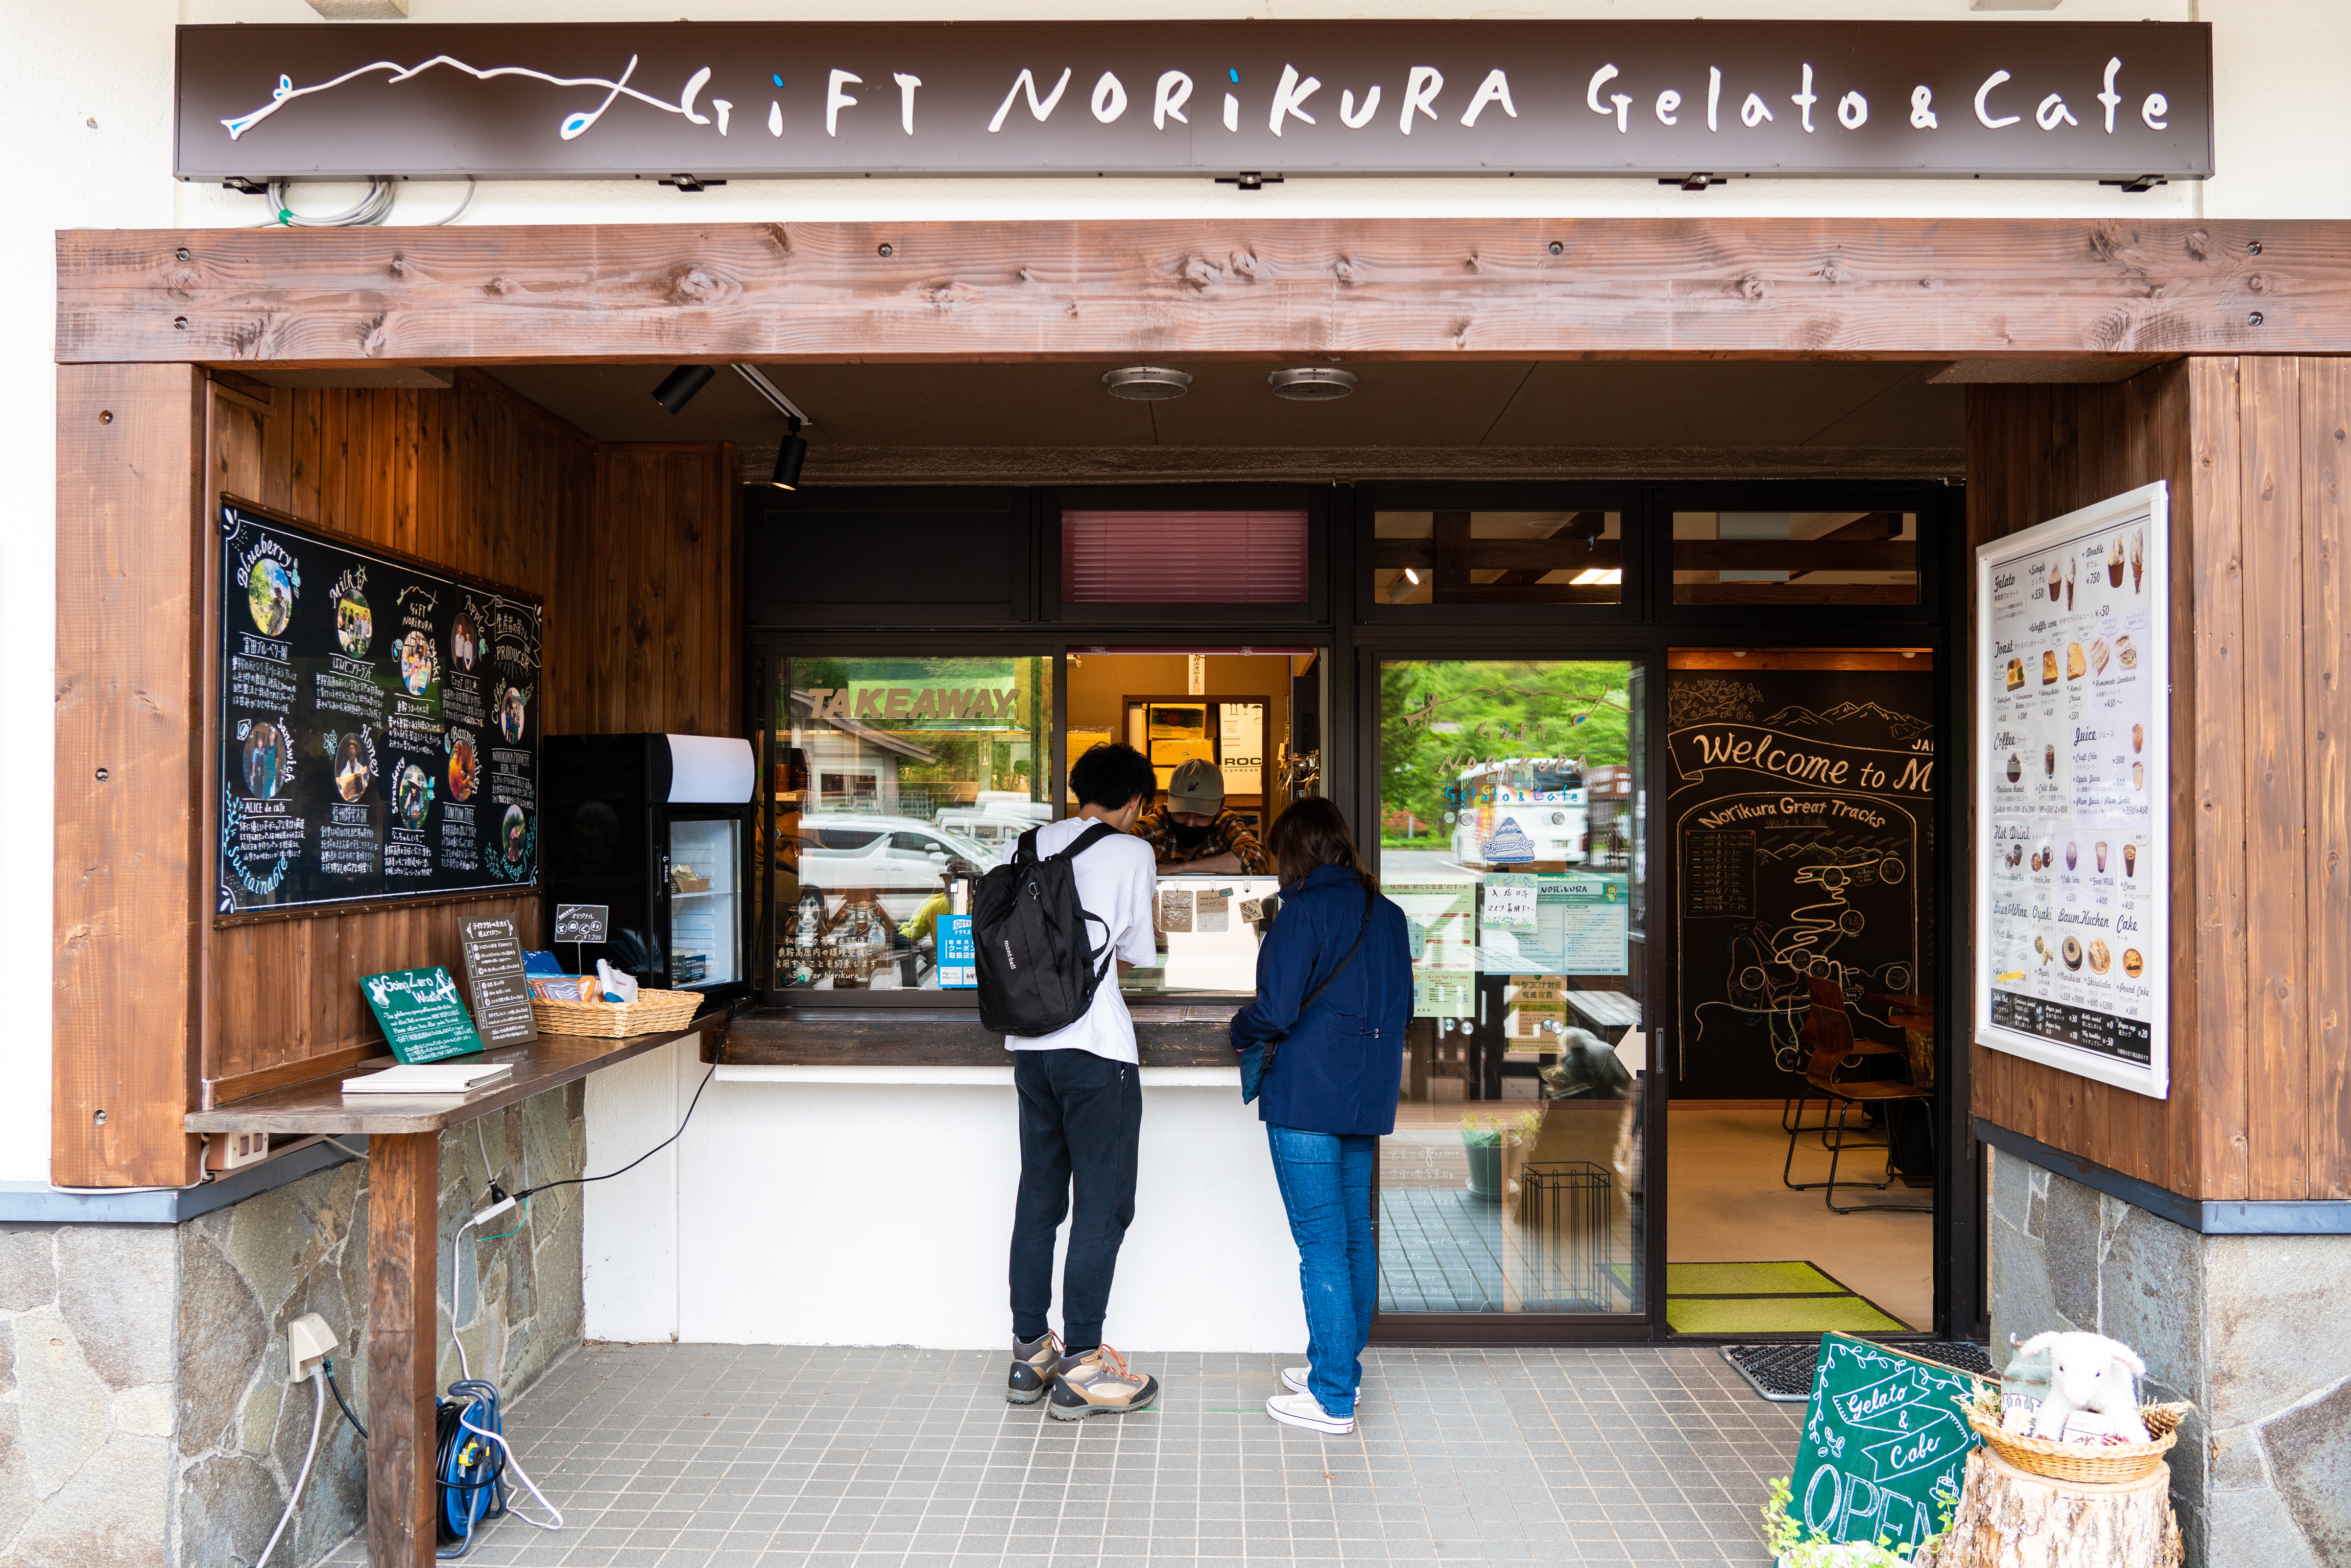 GiFT NORiKURA Gelato & Cafe